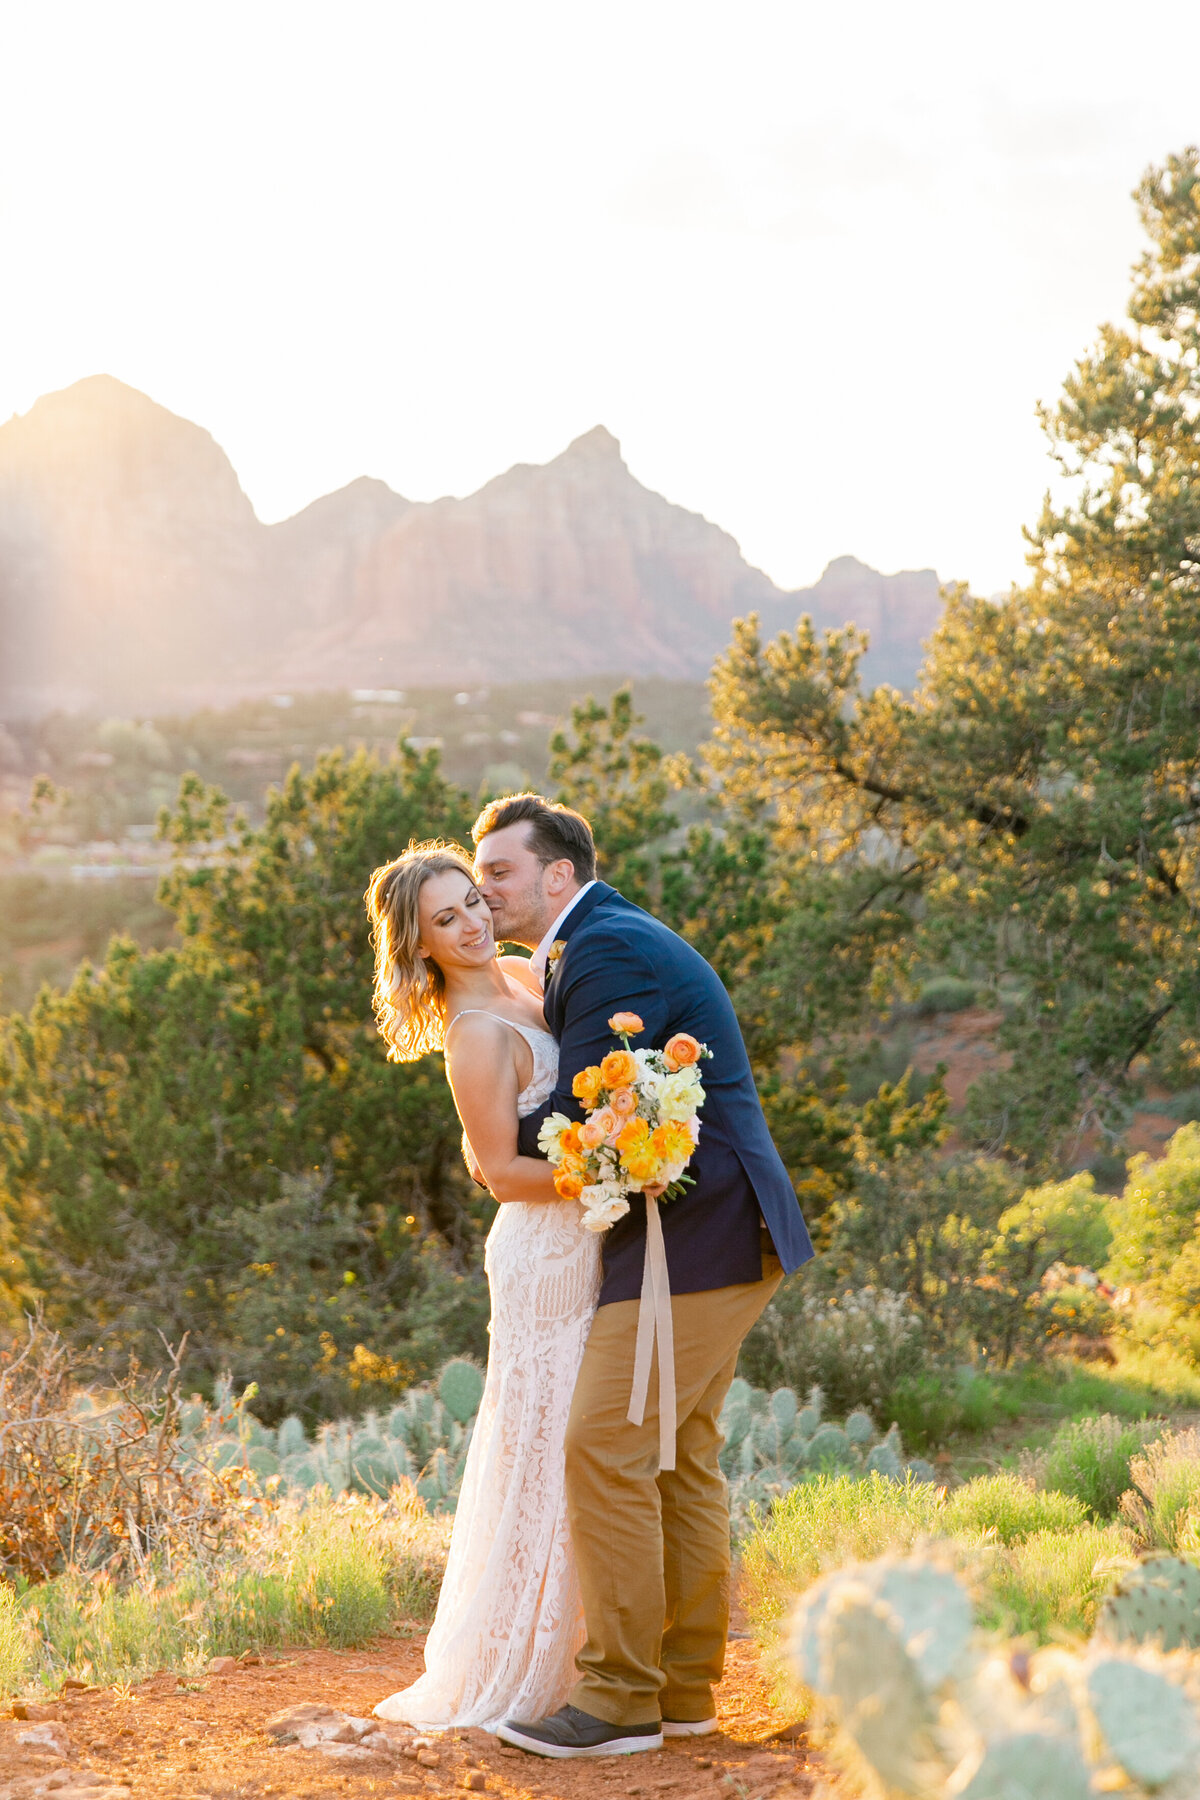 Karlie Colleen Photography - Sedona Arizona Elopement Wedding Photographer - Maxwell & Corynne-131